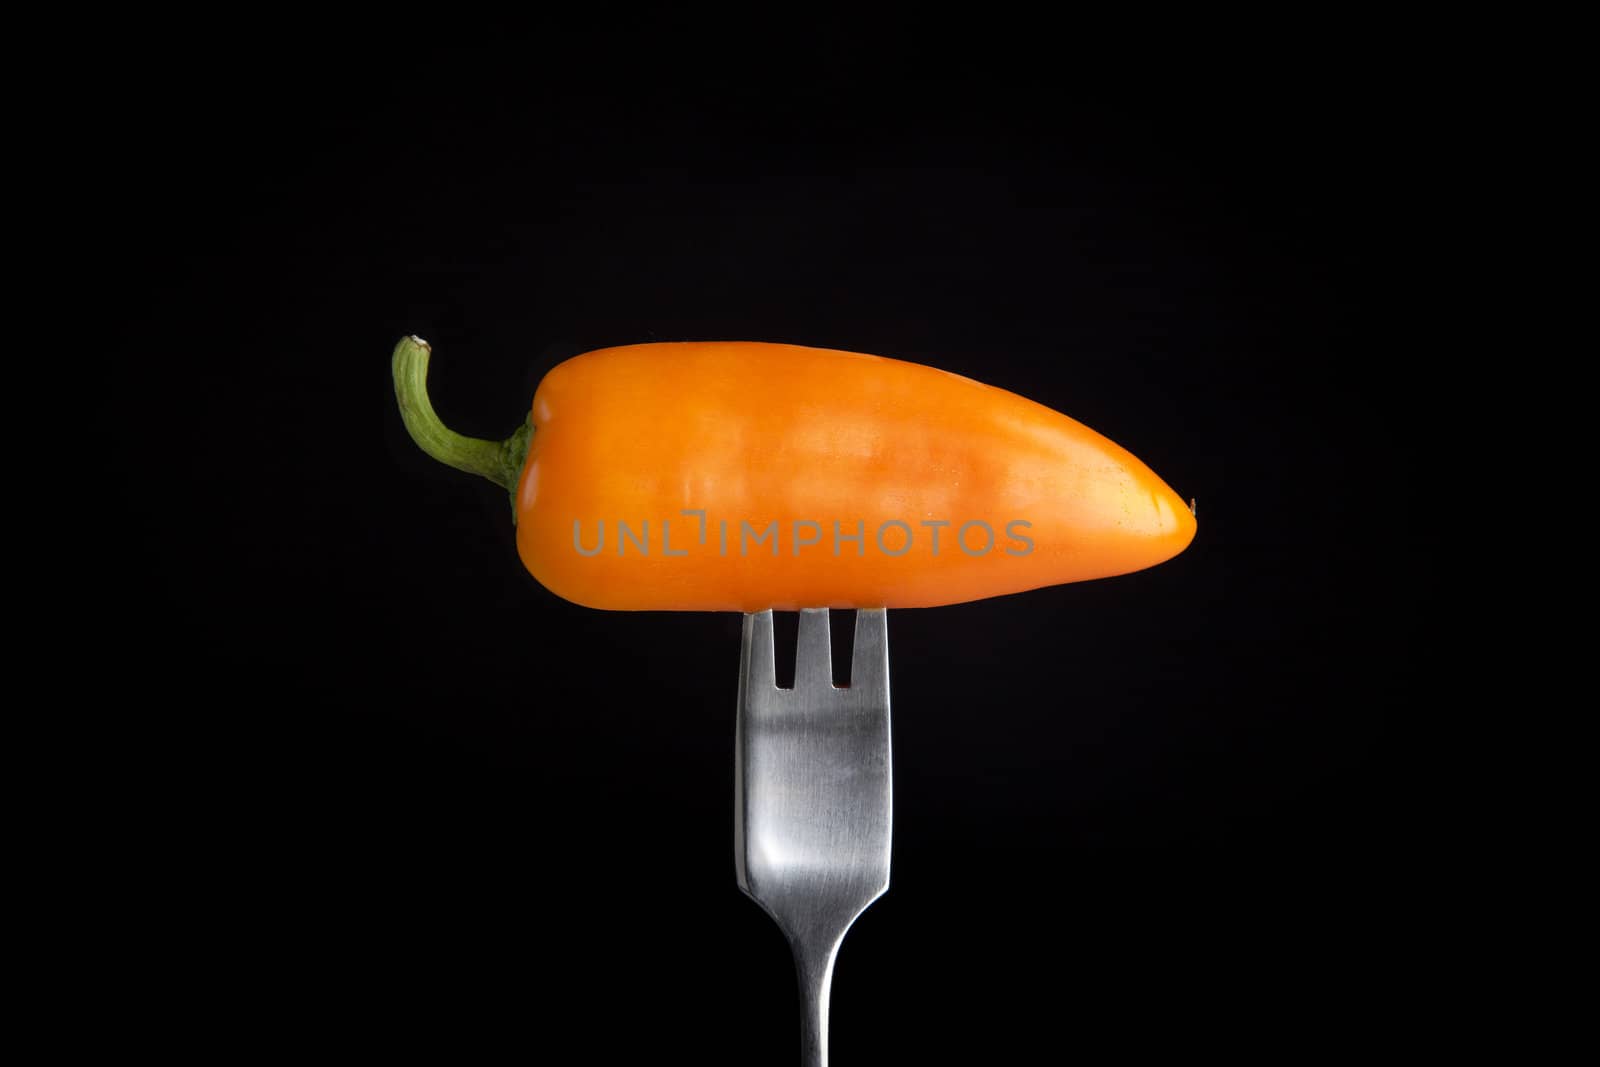 Sweet orange pepper on fork with black background.